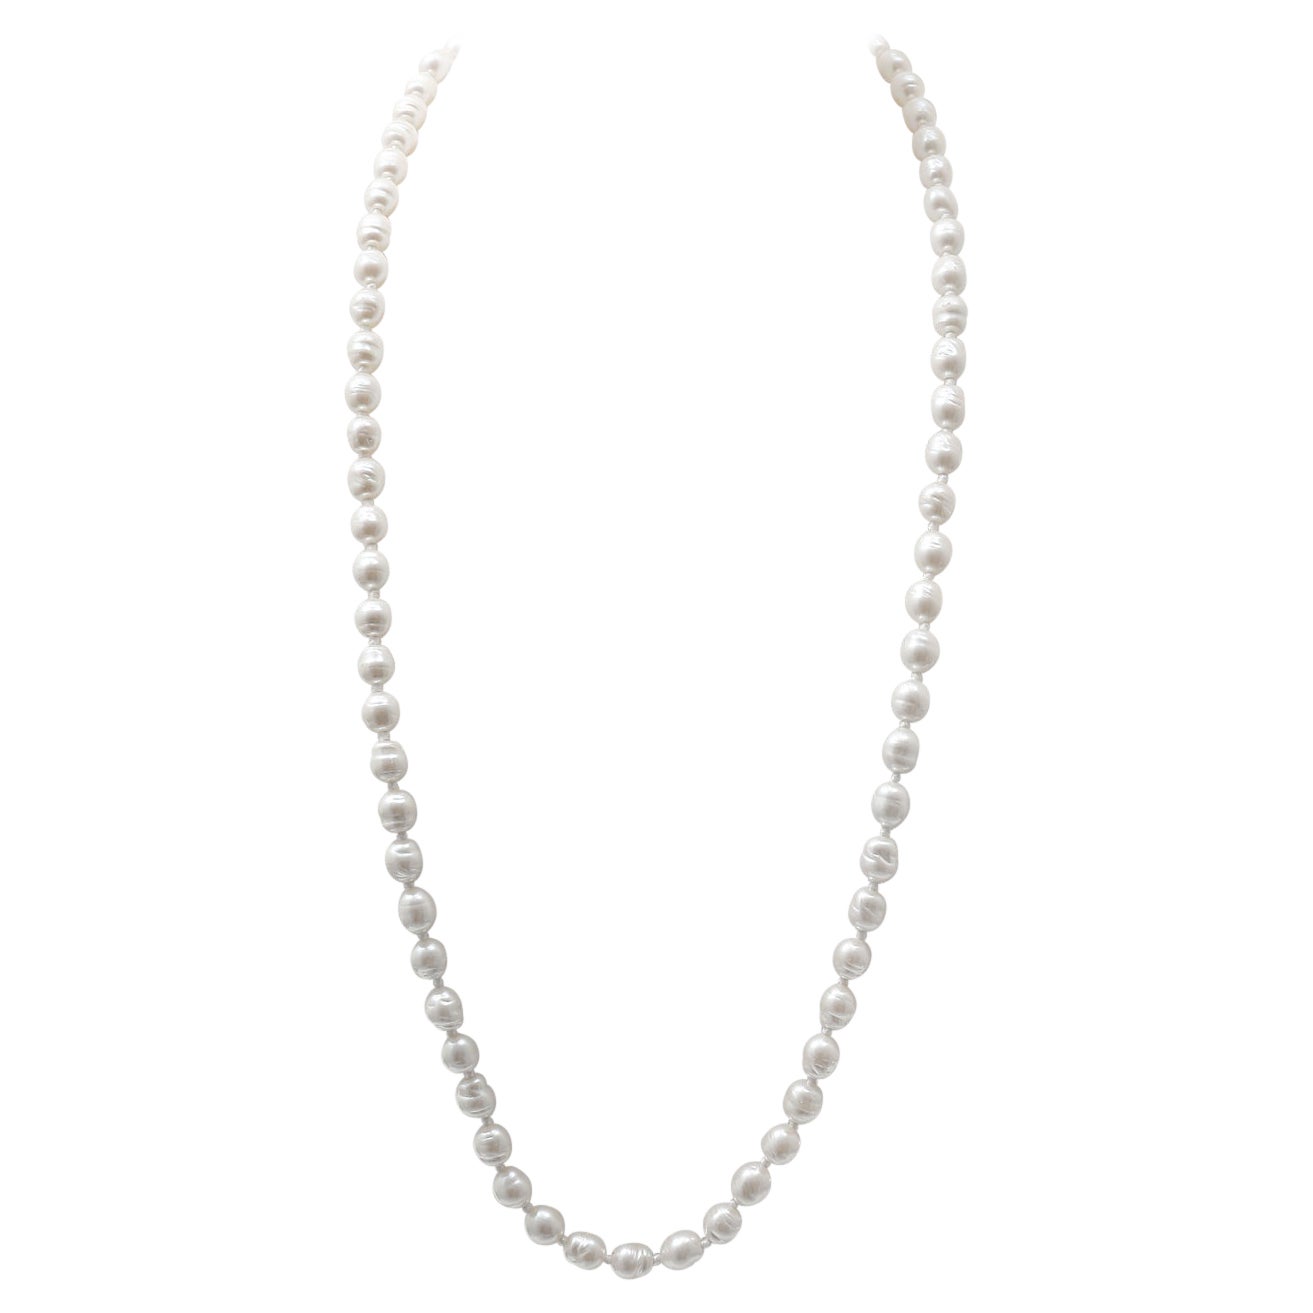 Chanel Collier de perles baroques blanches